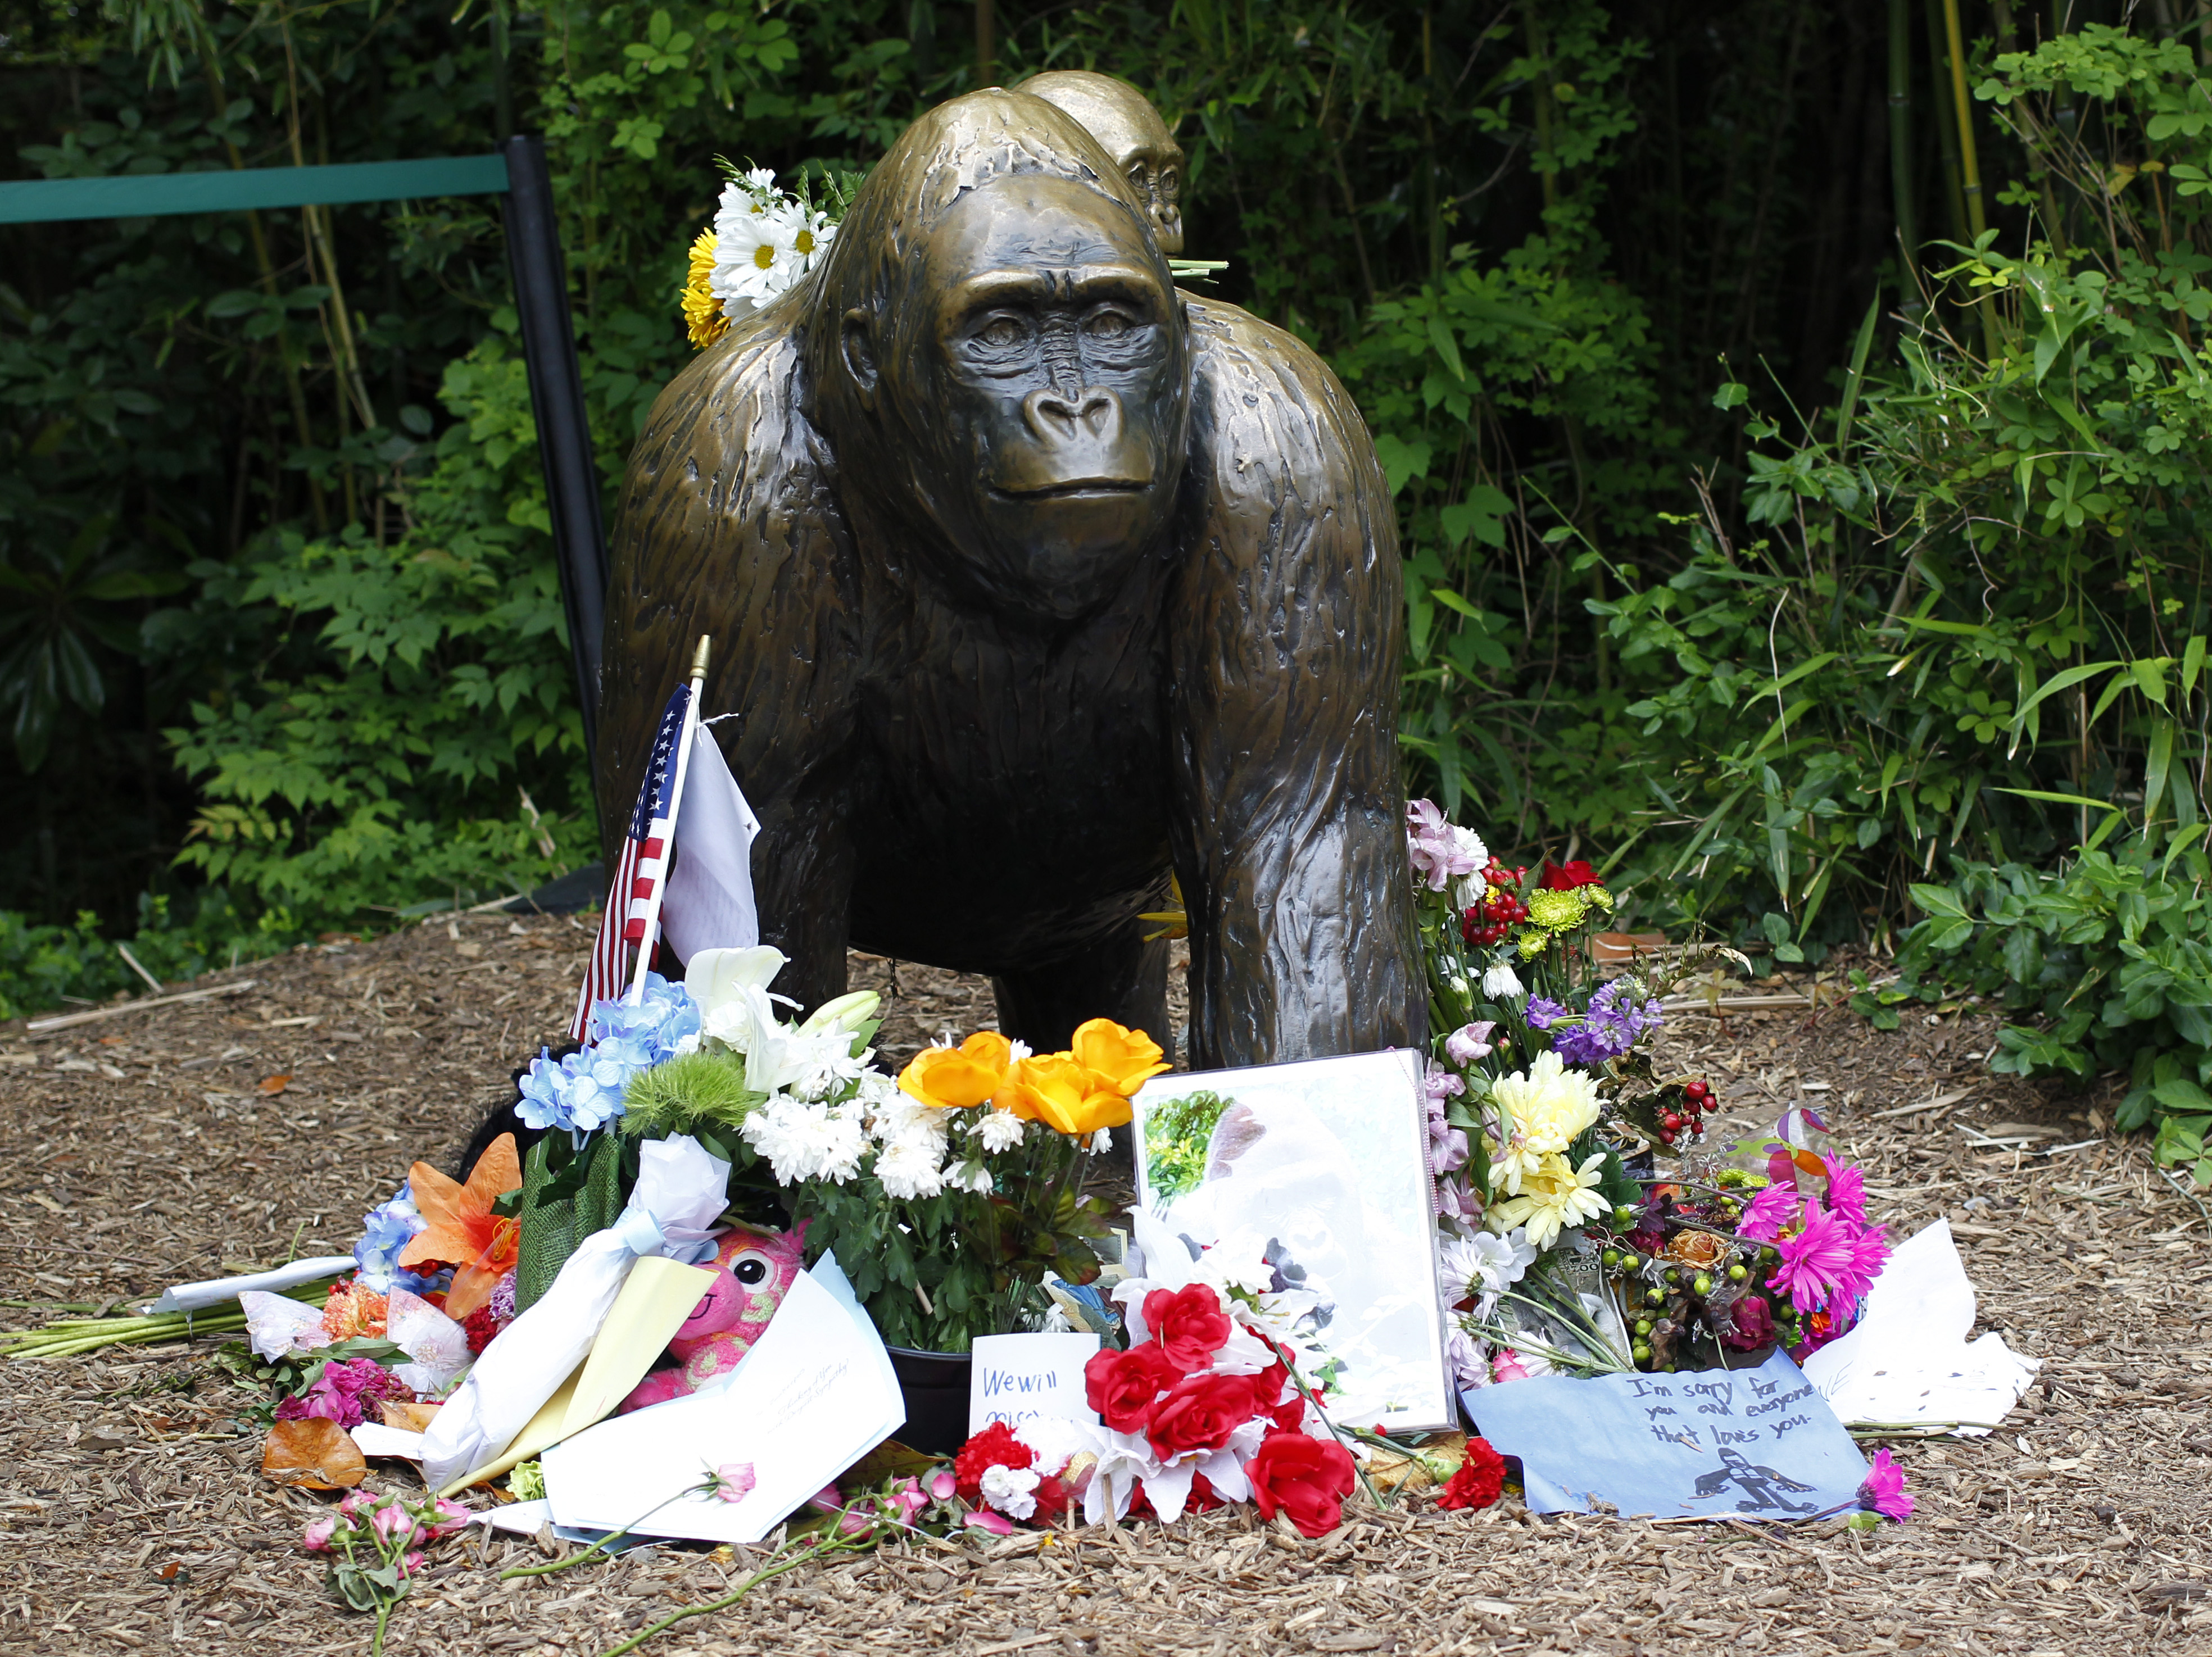 Flowers lay around a bronze statue of a gorilla and her baby outside the Cincinnati Zoo's Gorilla World exhibit in Cincinnati, Ohio, on June 2, 2016.